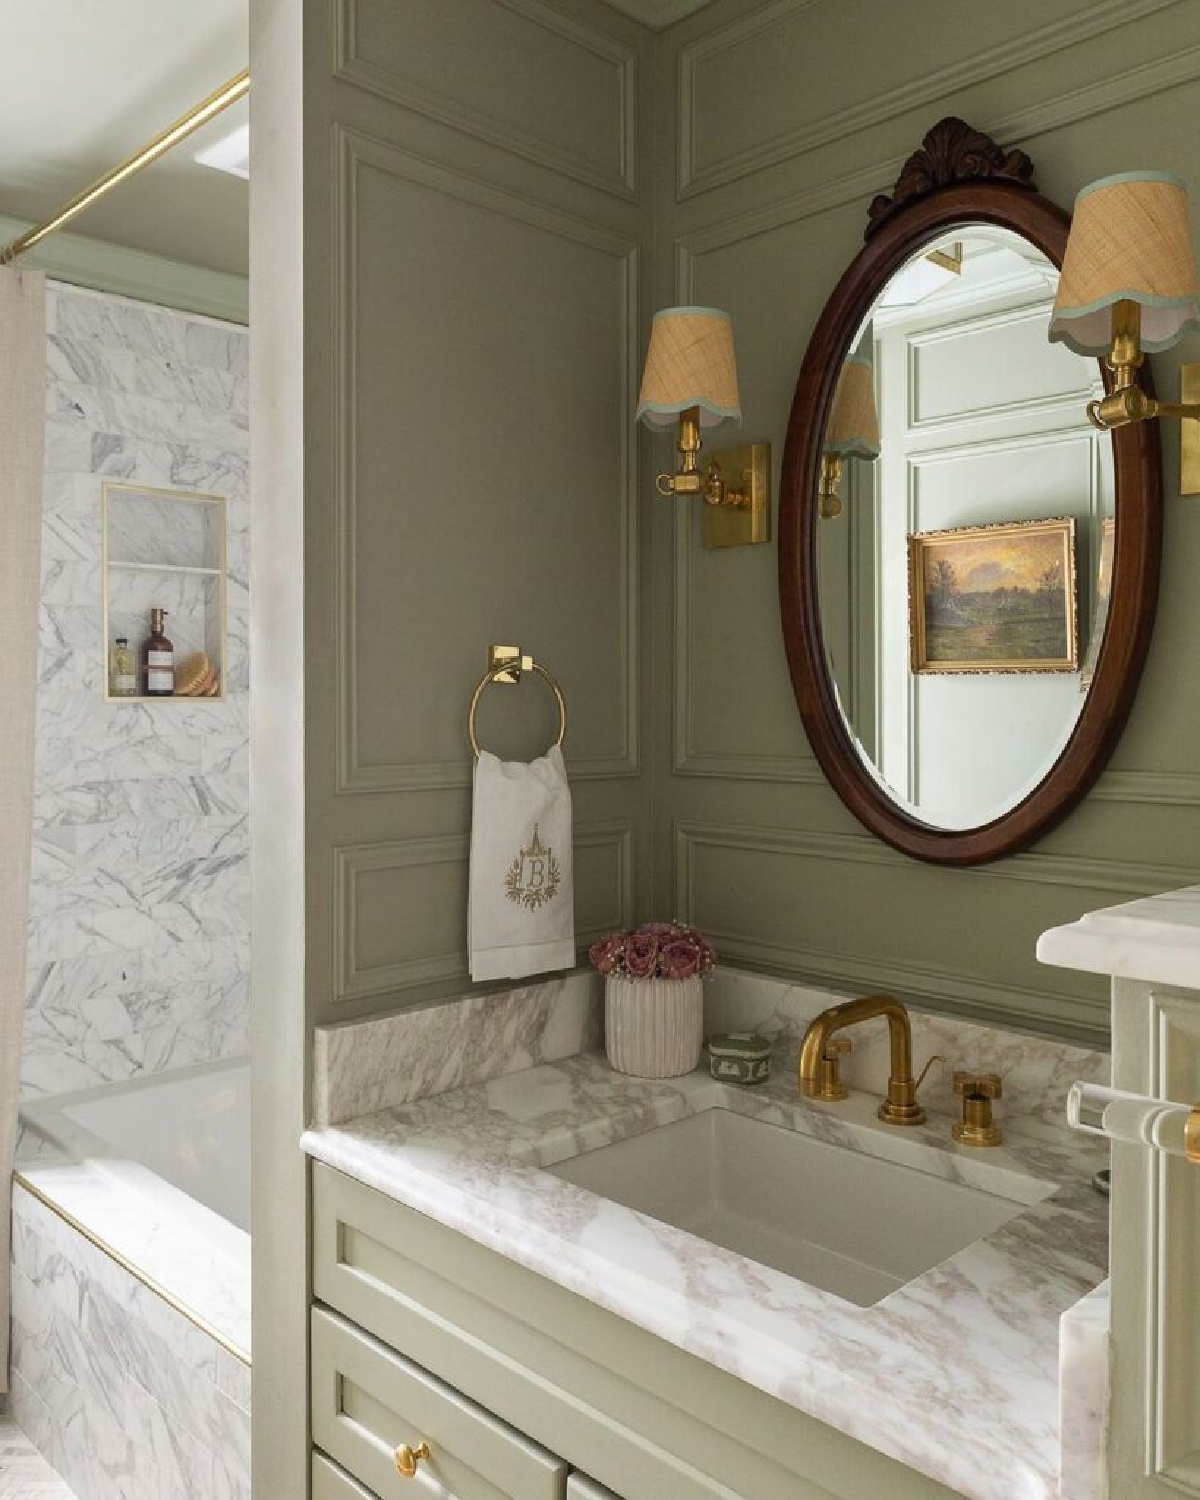 Alisa Bovino designed warm green-gray bath with white marble. #europeancottage #elegantbath #rusticelegance #bathroomdesign